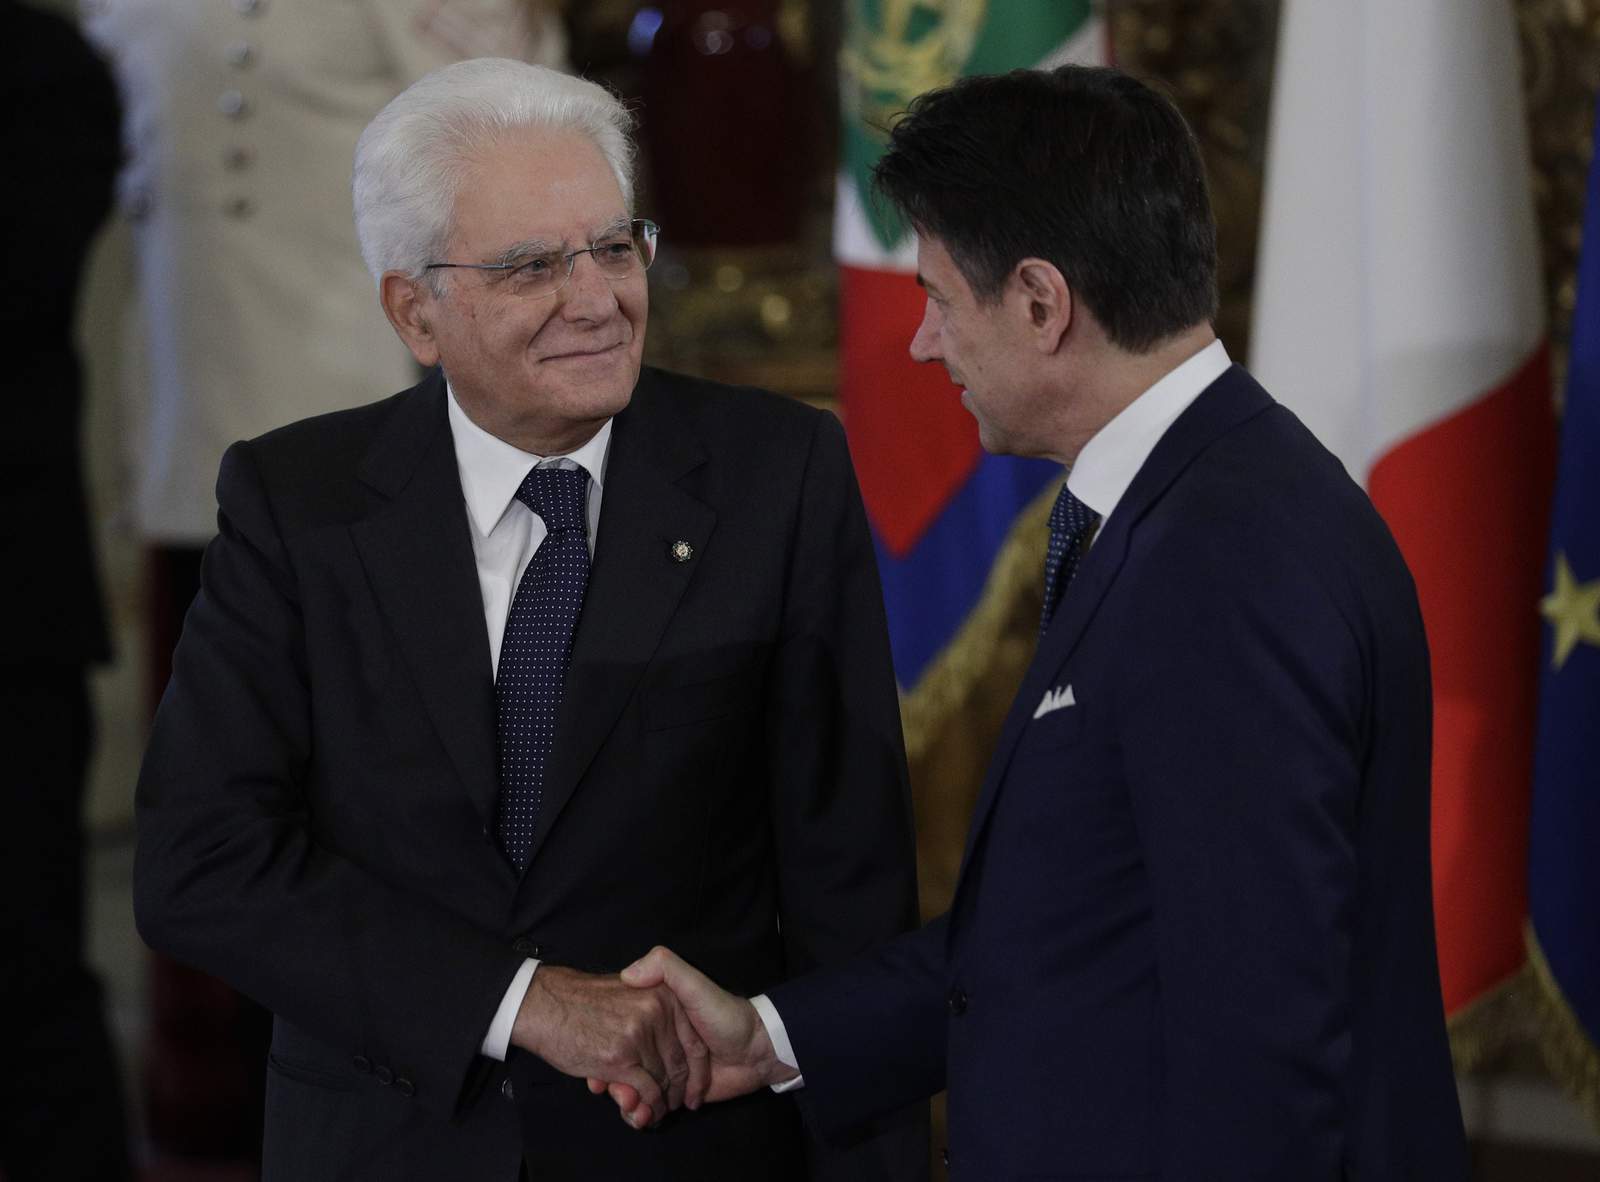 Italian premier resigns, setting off scramble for new allies